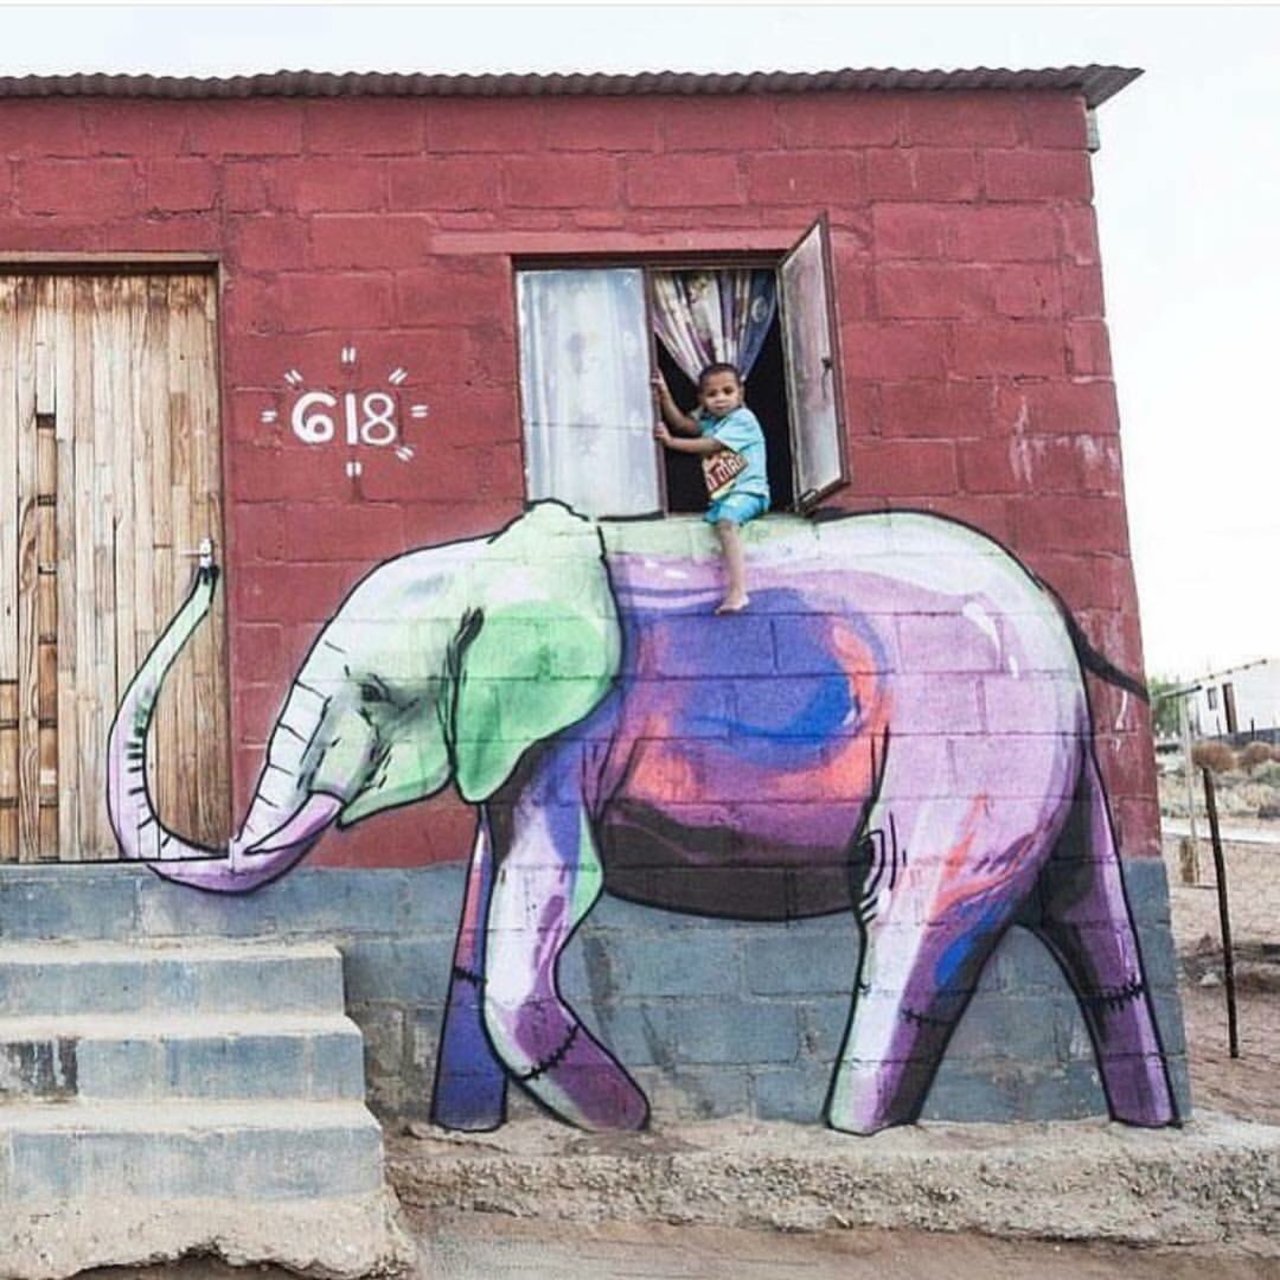 #switch #streetart by #falko in #southafrica #graffiti #arte #art #bedifferent https://t.co/ylzN2IuFIC